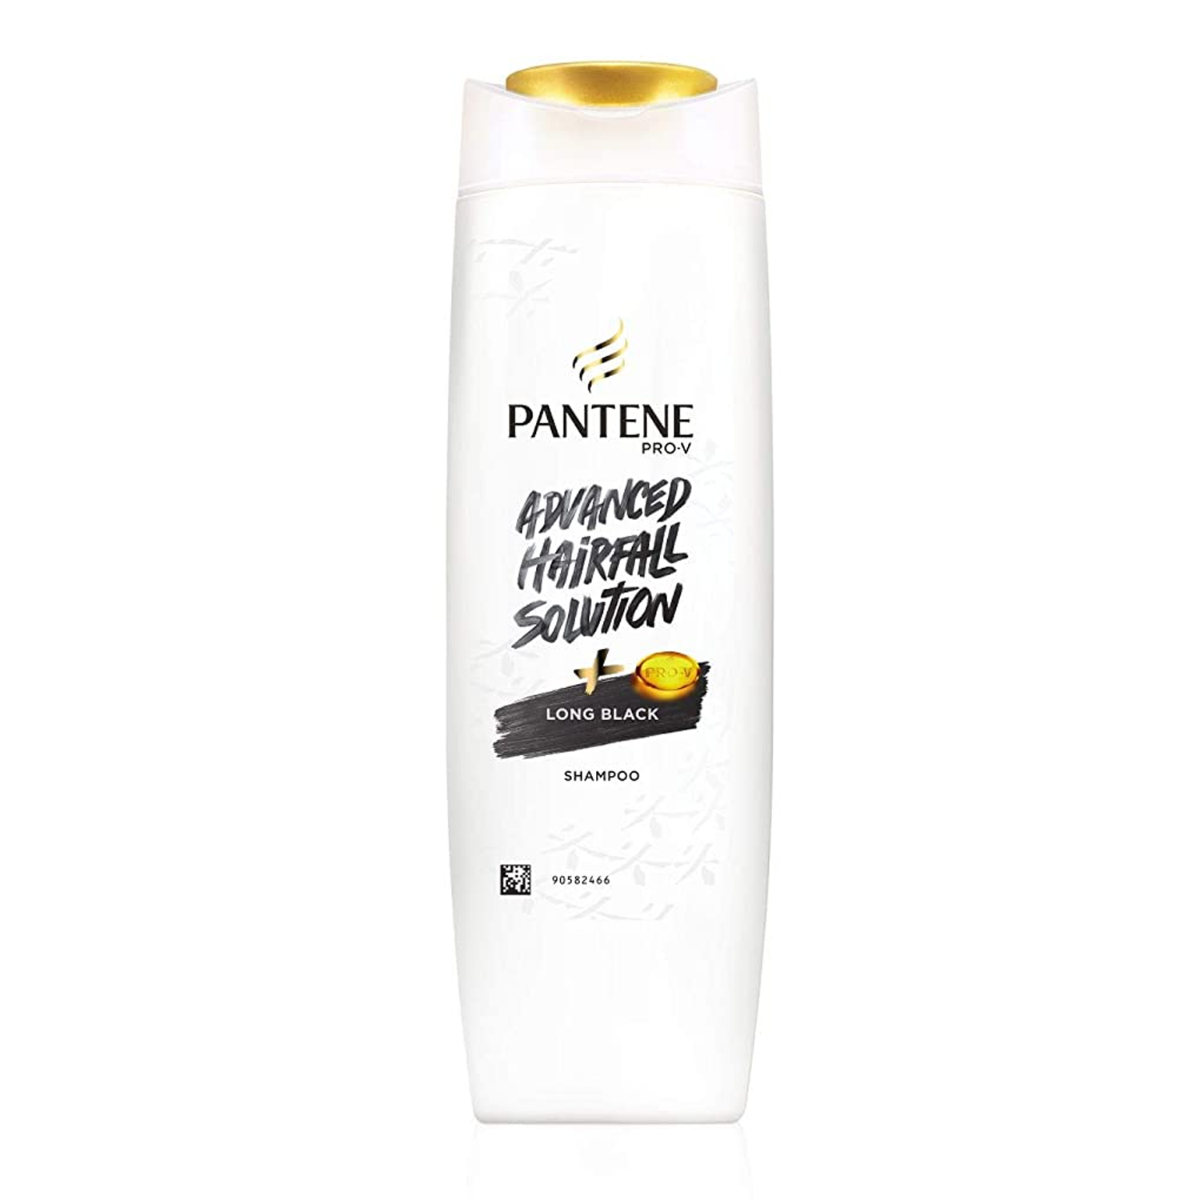 Pantene Advanced Hair Fall Solution Shampoo - Long Black, 180ml